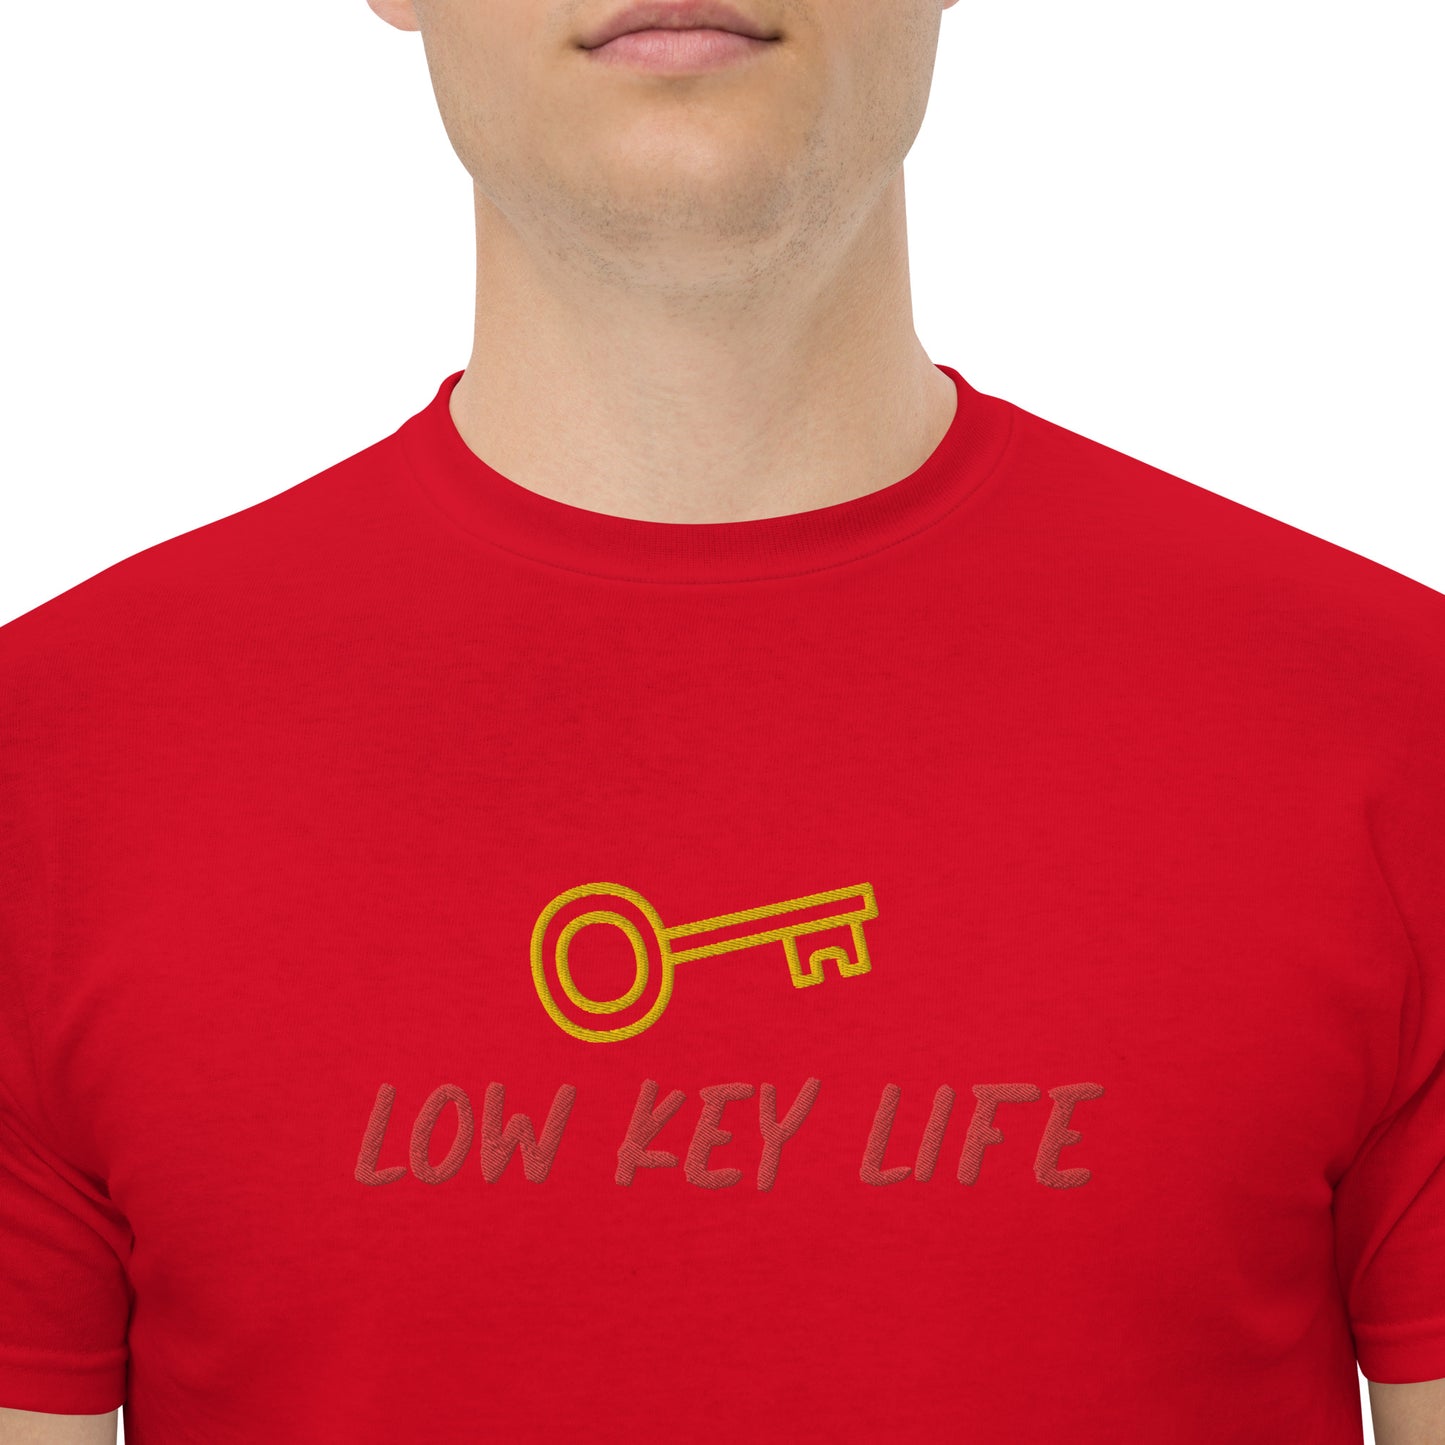 Herren-T-Shirt „Low Key Life“.